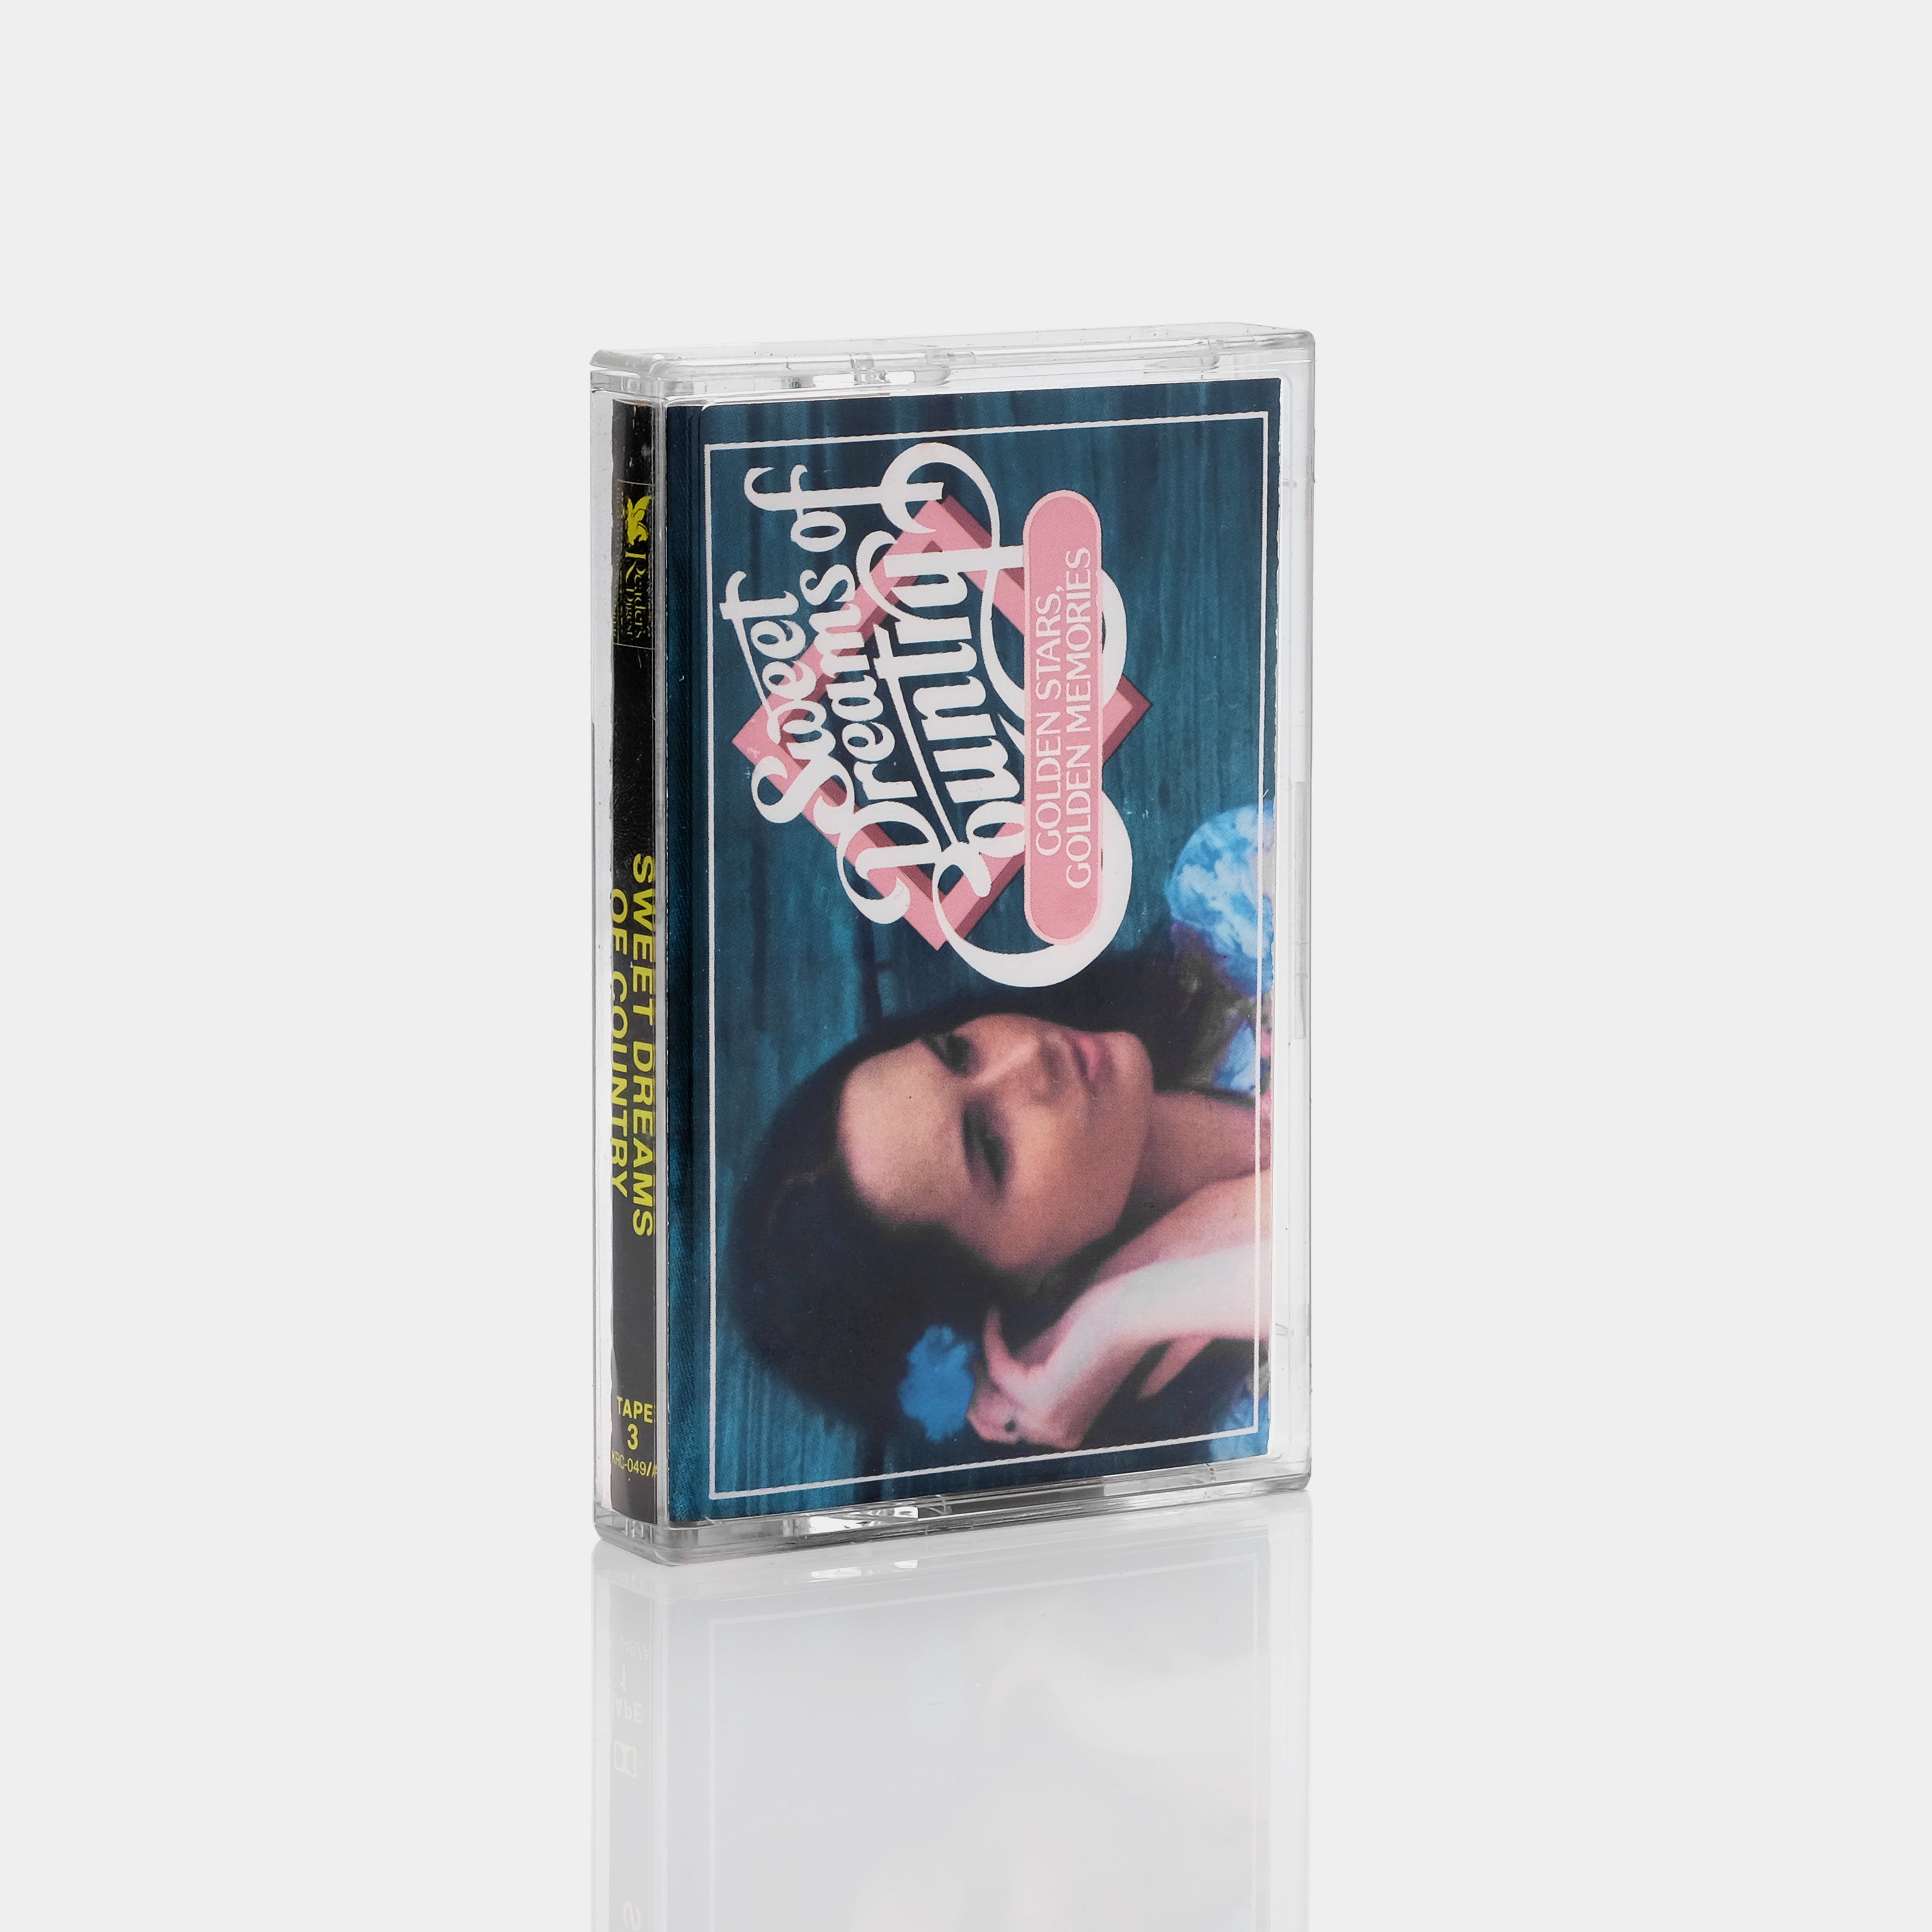 Sweet Dreams of Country: Golden Stars, Golden Memories (Vol. 3) Cassette Tape